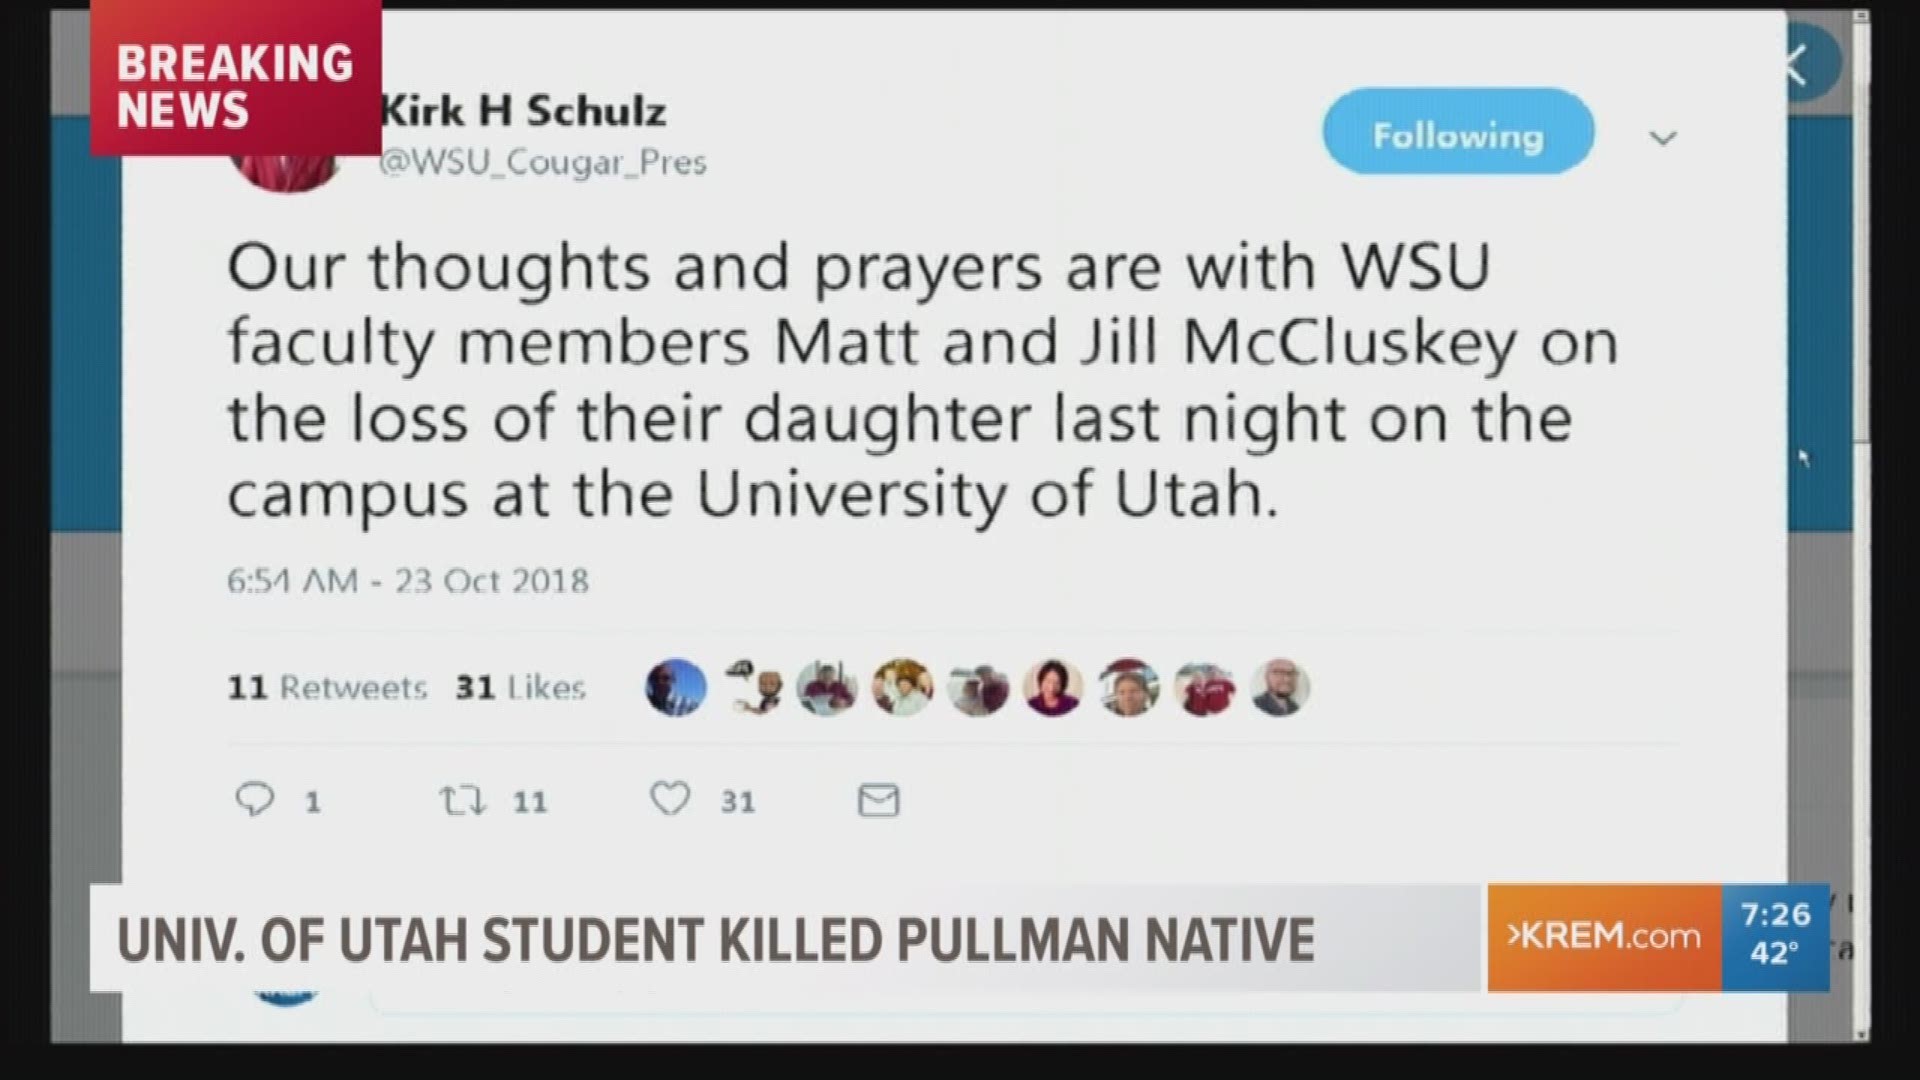 Univ. of Utah student killed identified as Pullman native